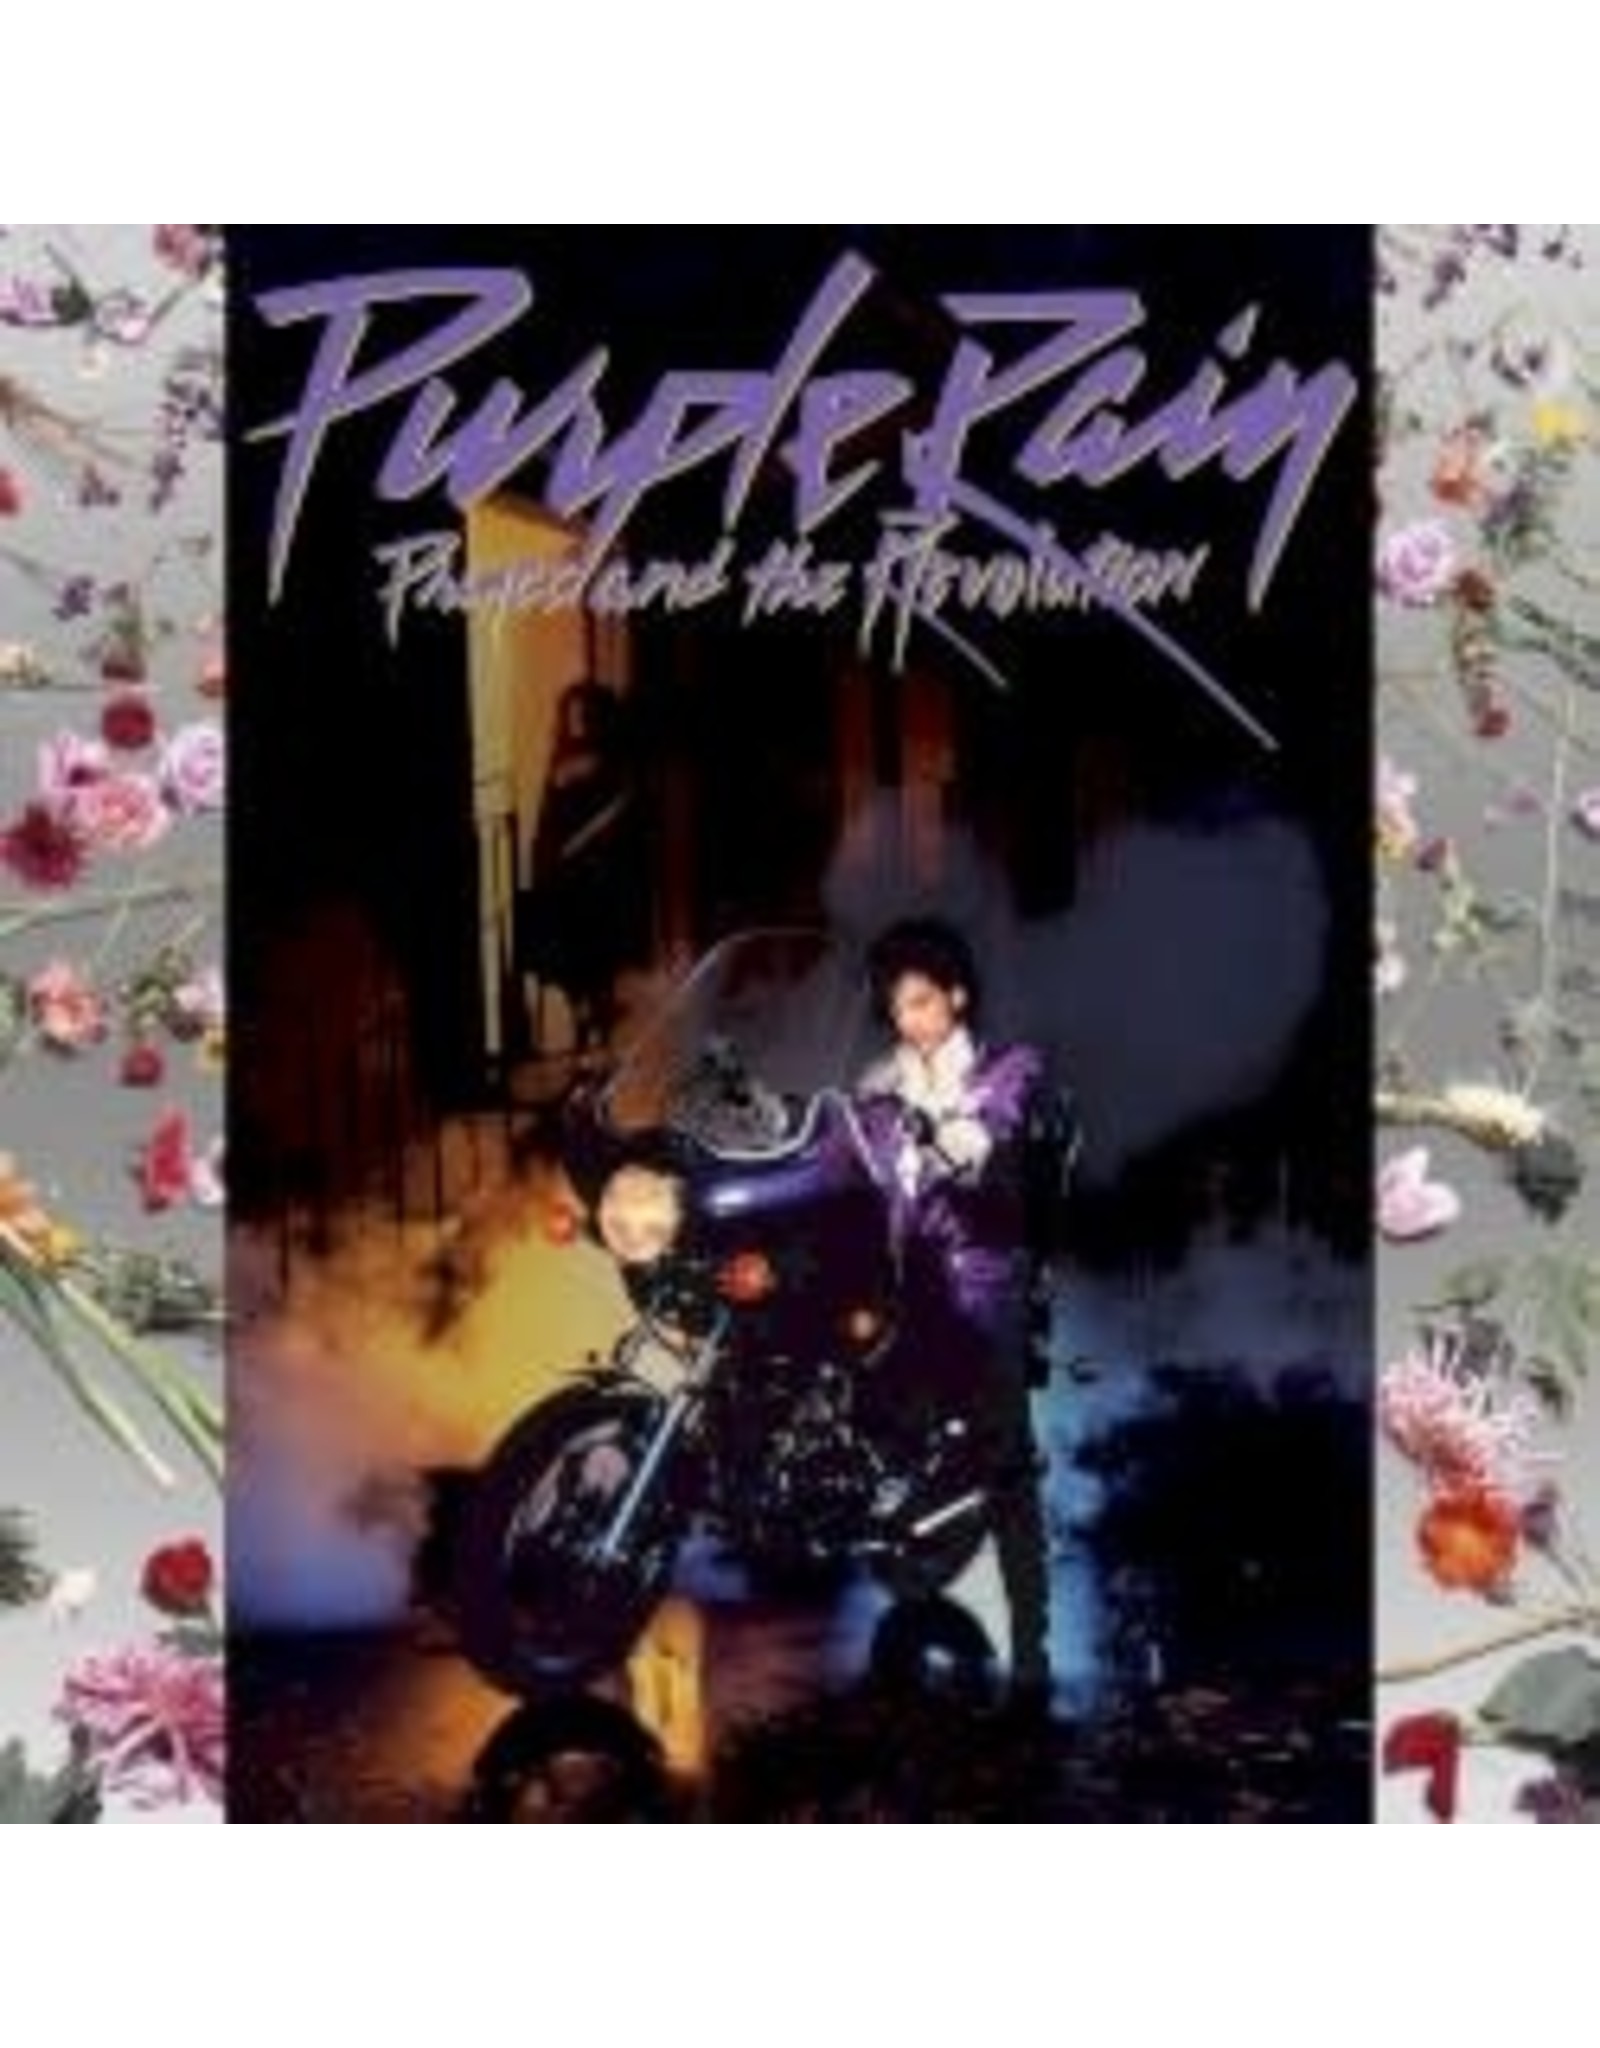 Prince - Purple Rain (Deluxe 3 CD & DVD Set)